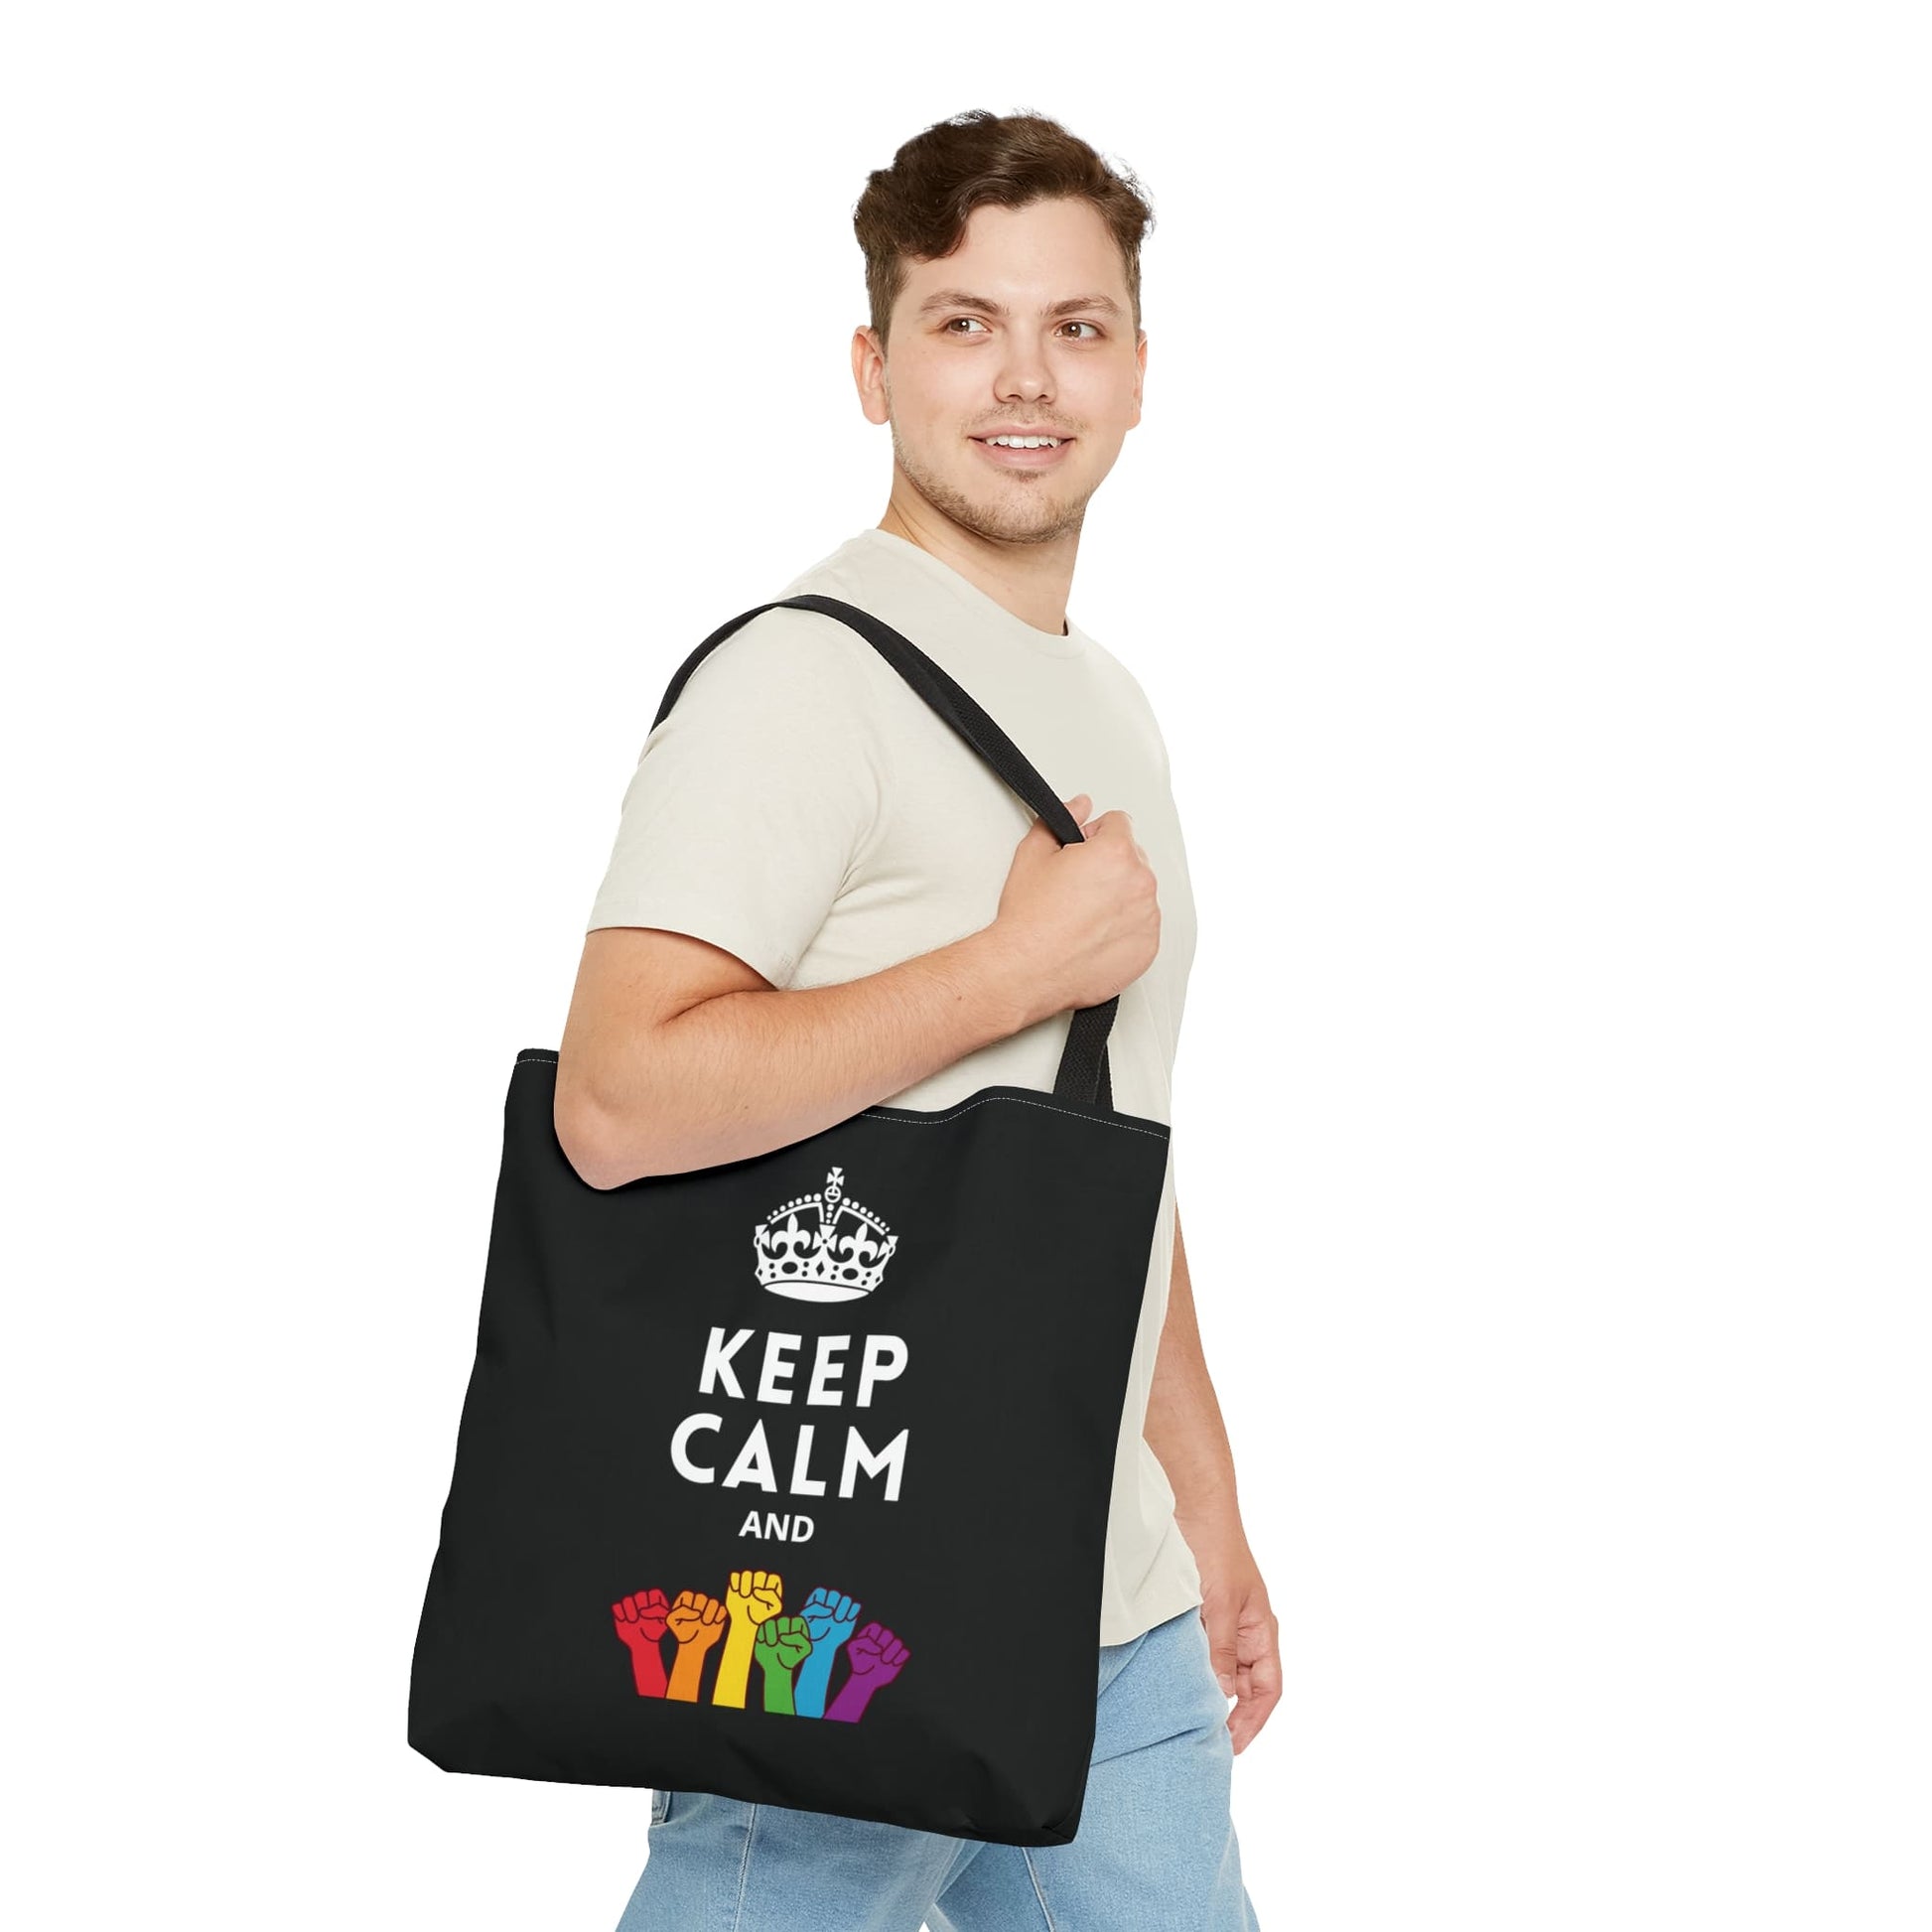 pride tote bag, fight LGBTQ rights bag, large